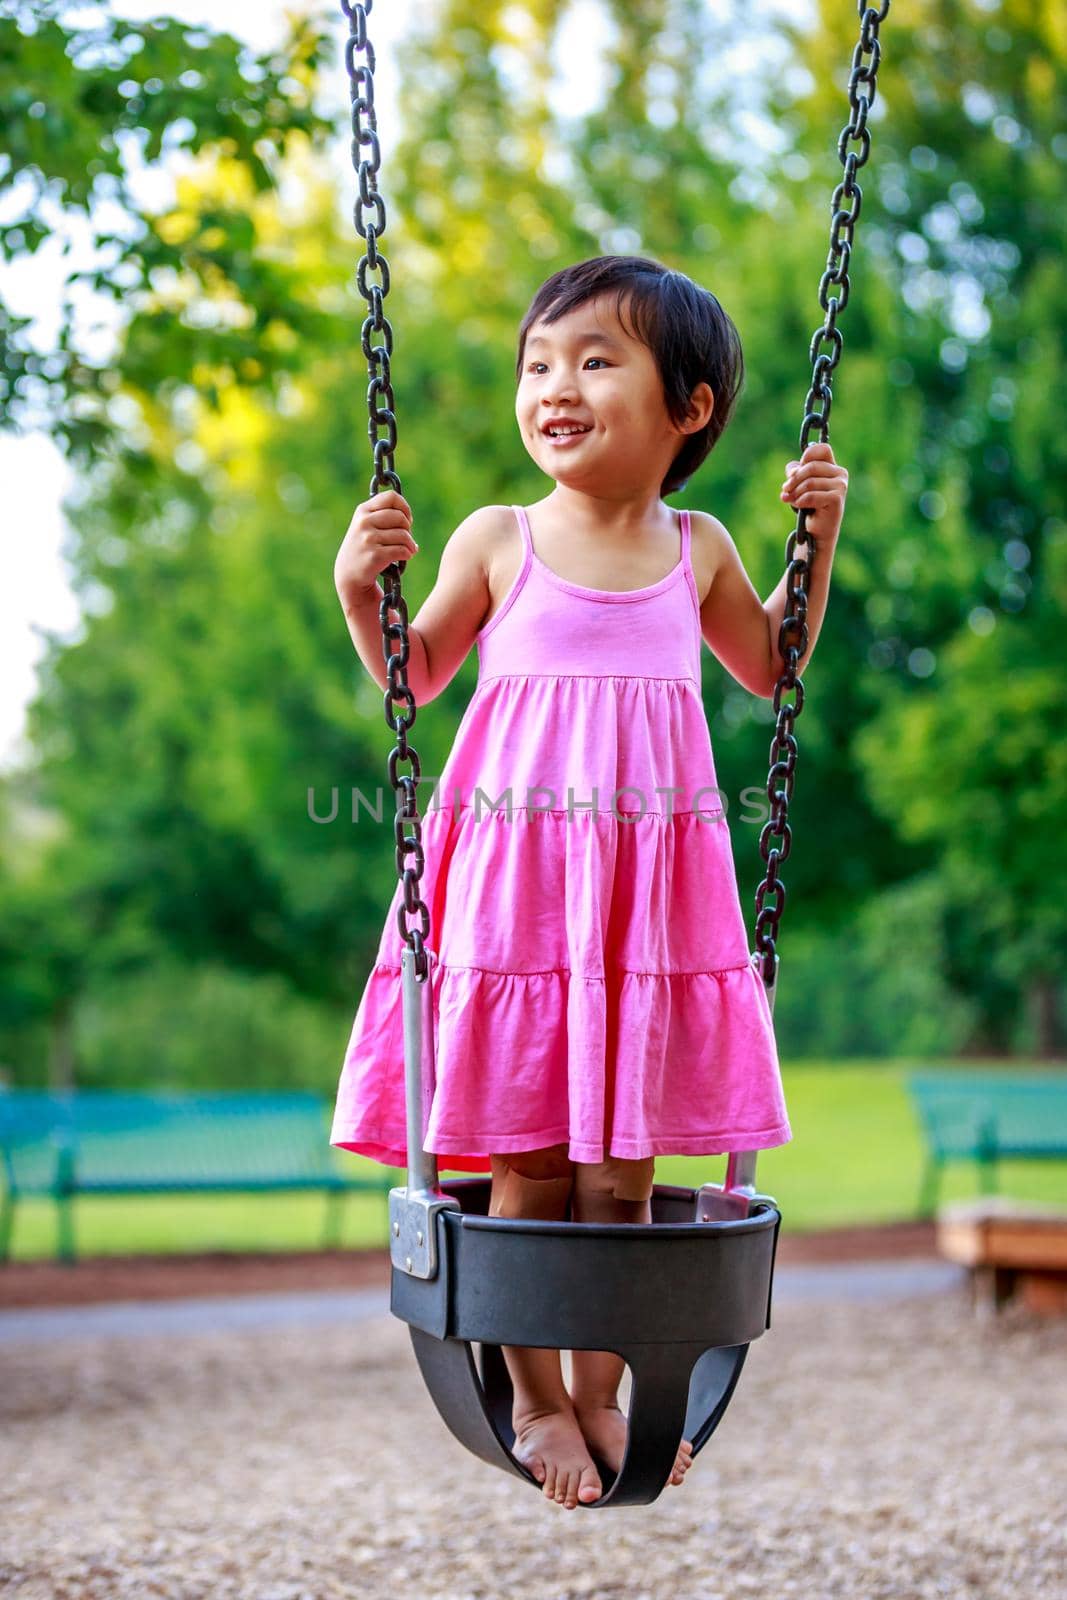 Adorable girl enjoys play time on the swing.